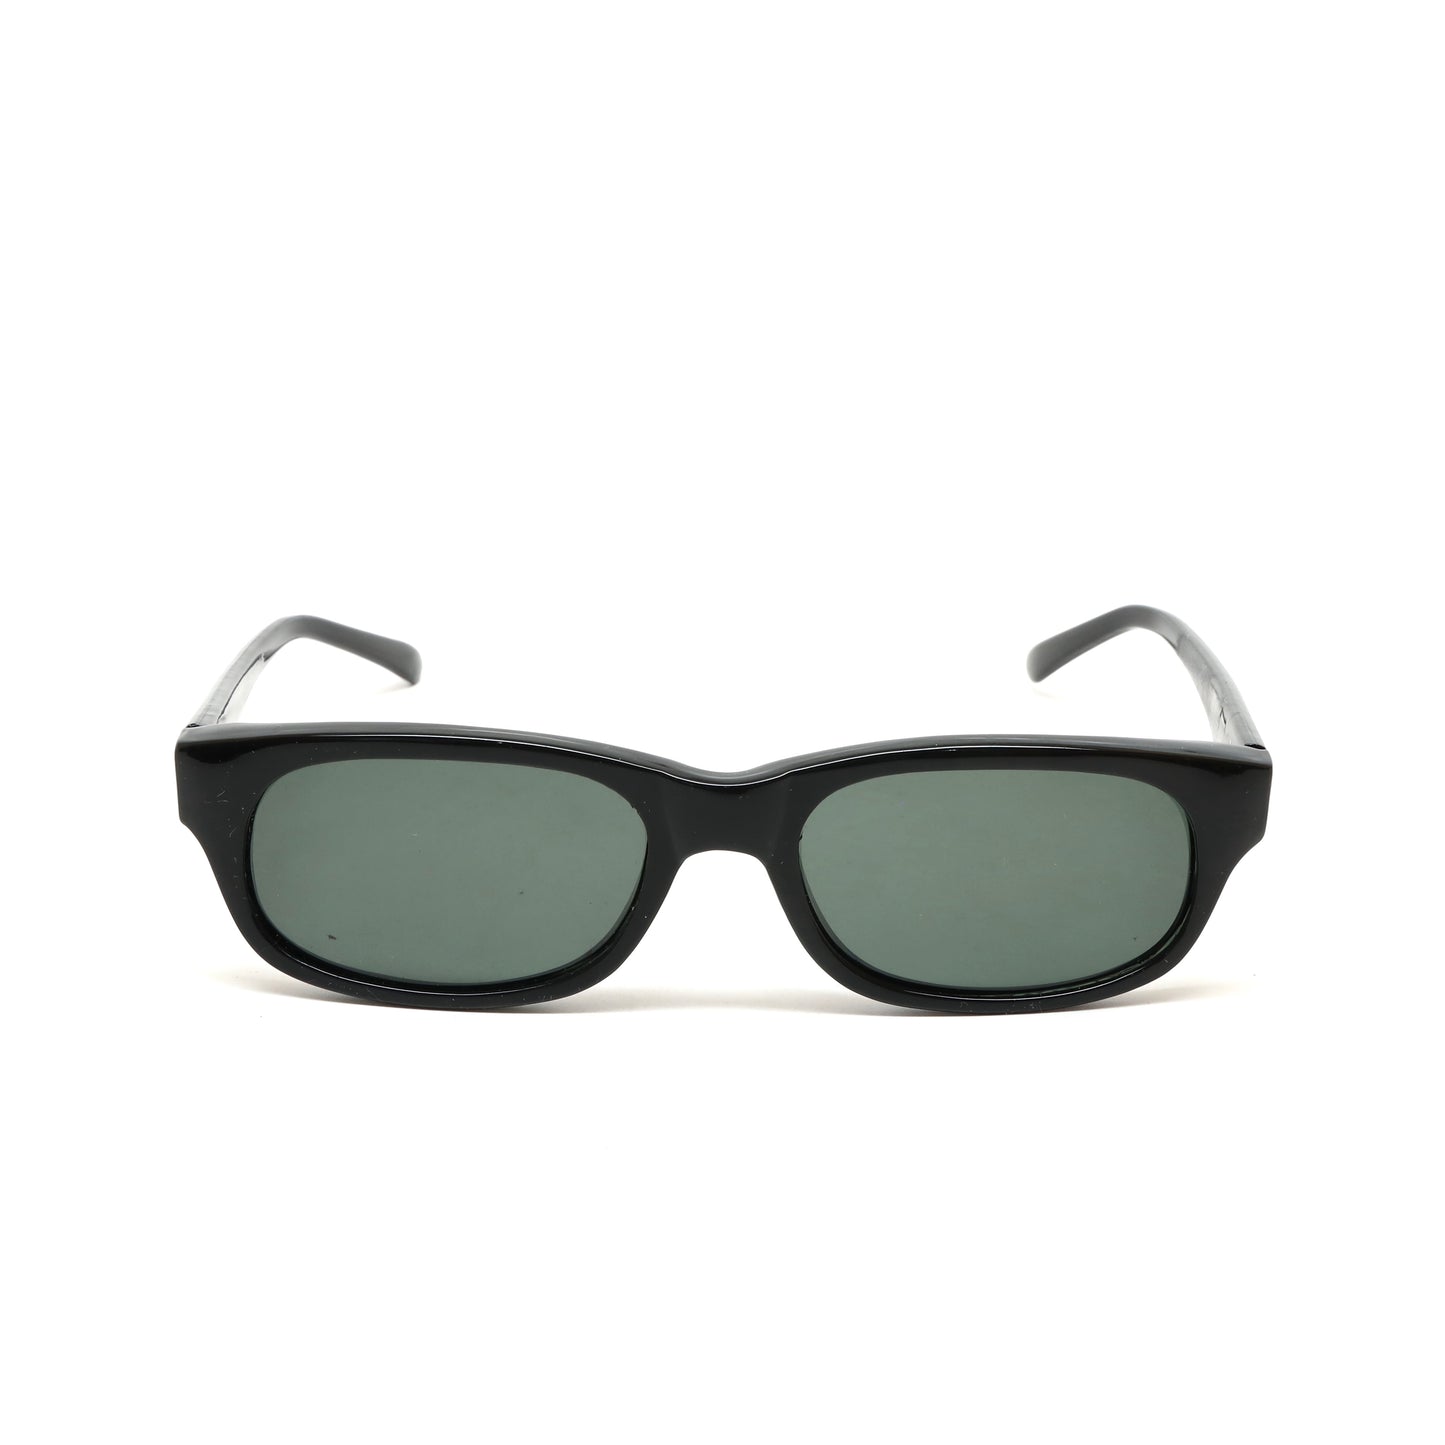 Vintage Small Size Rectangle Frame Slim Narrow Sunglasses - Black